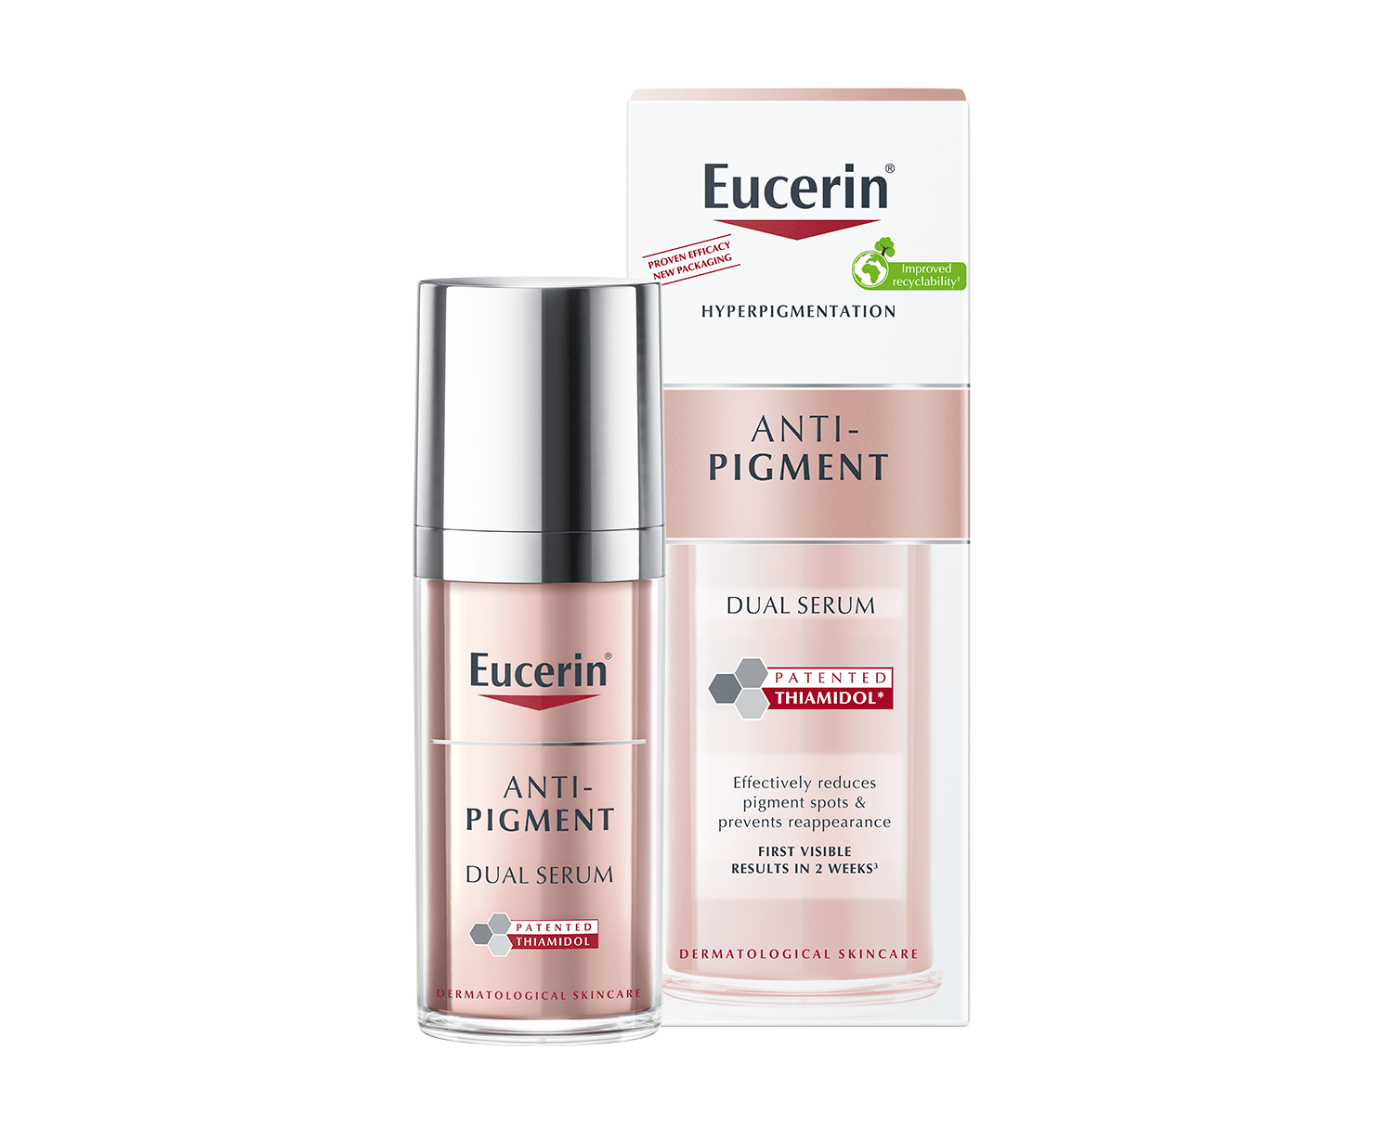 Packshot of Eucerin Anti-Pigment Dual Serum and packaging